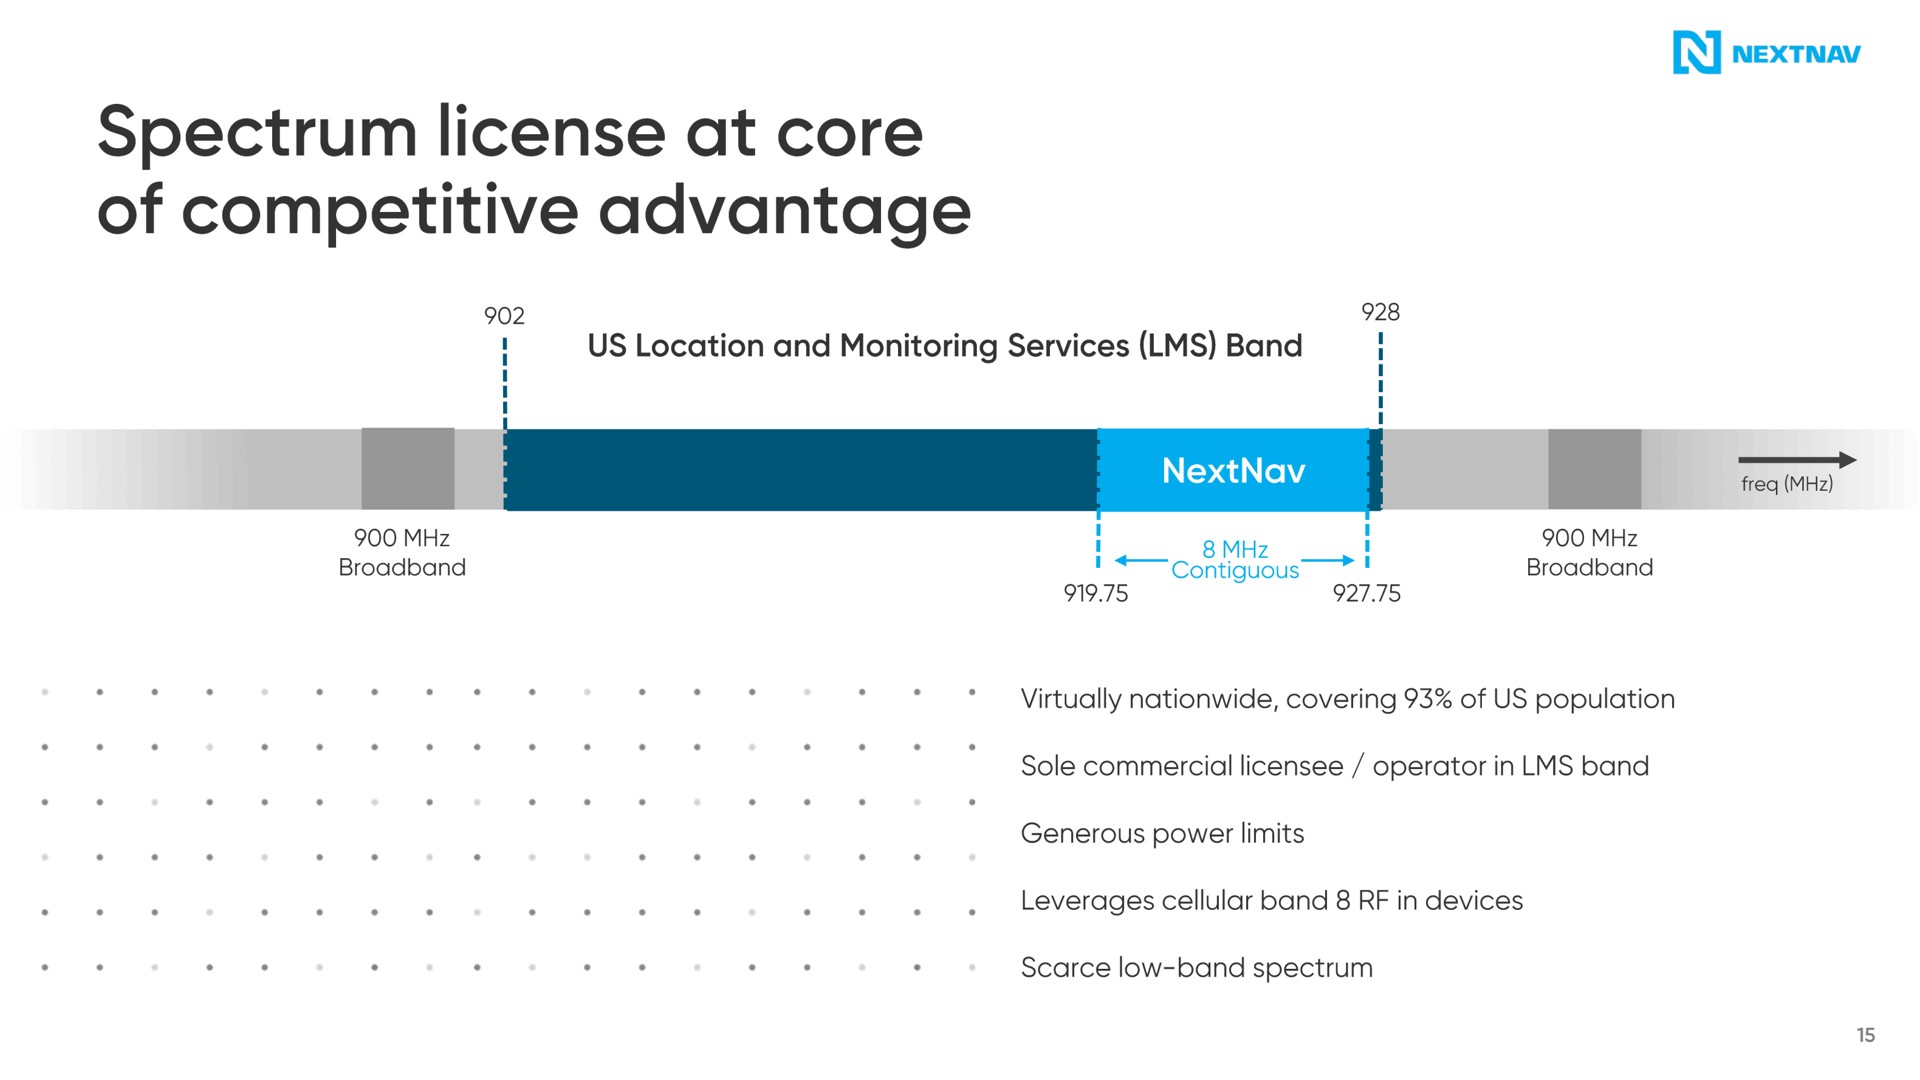 spectrum license at core of competitive advantage | NextNav